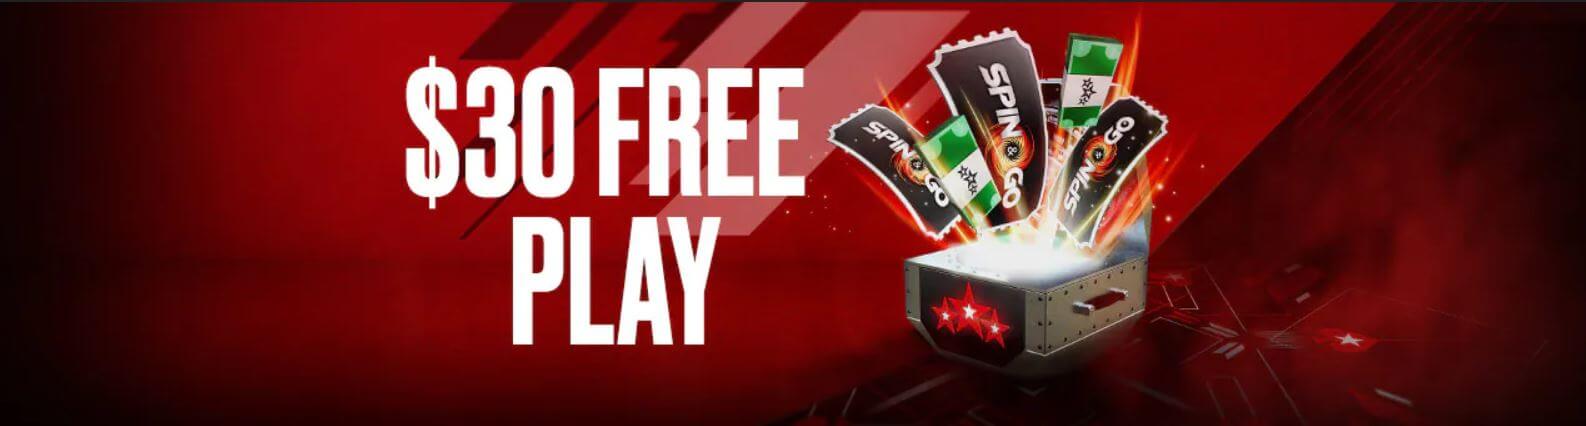 pokerstars free play offer